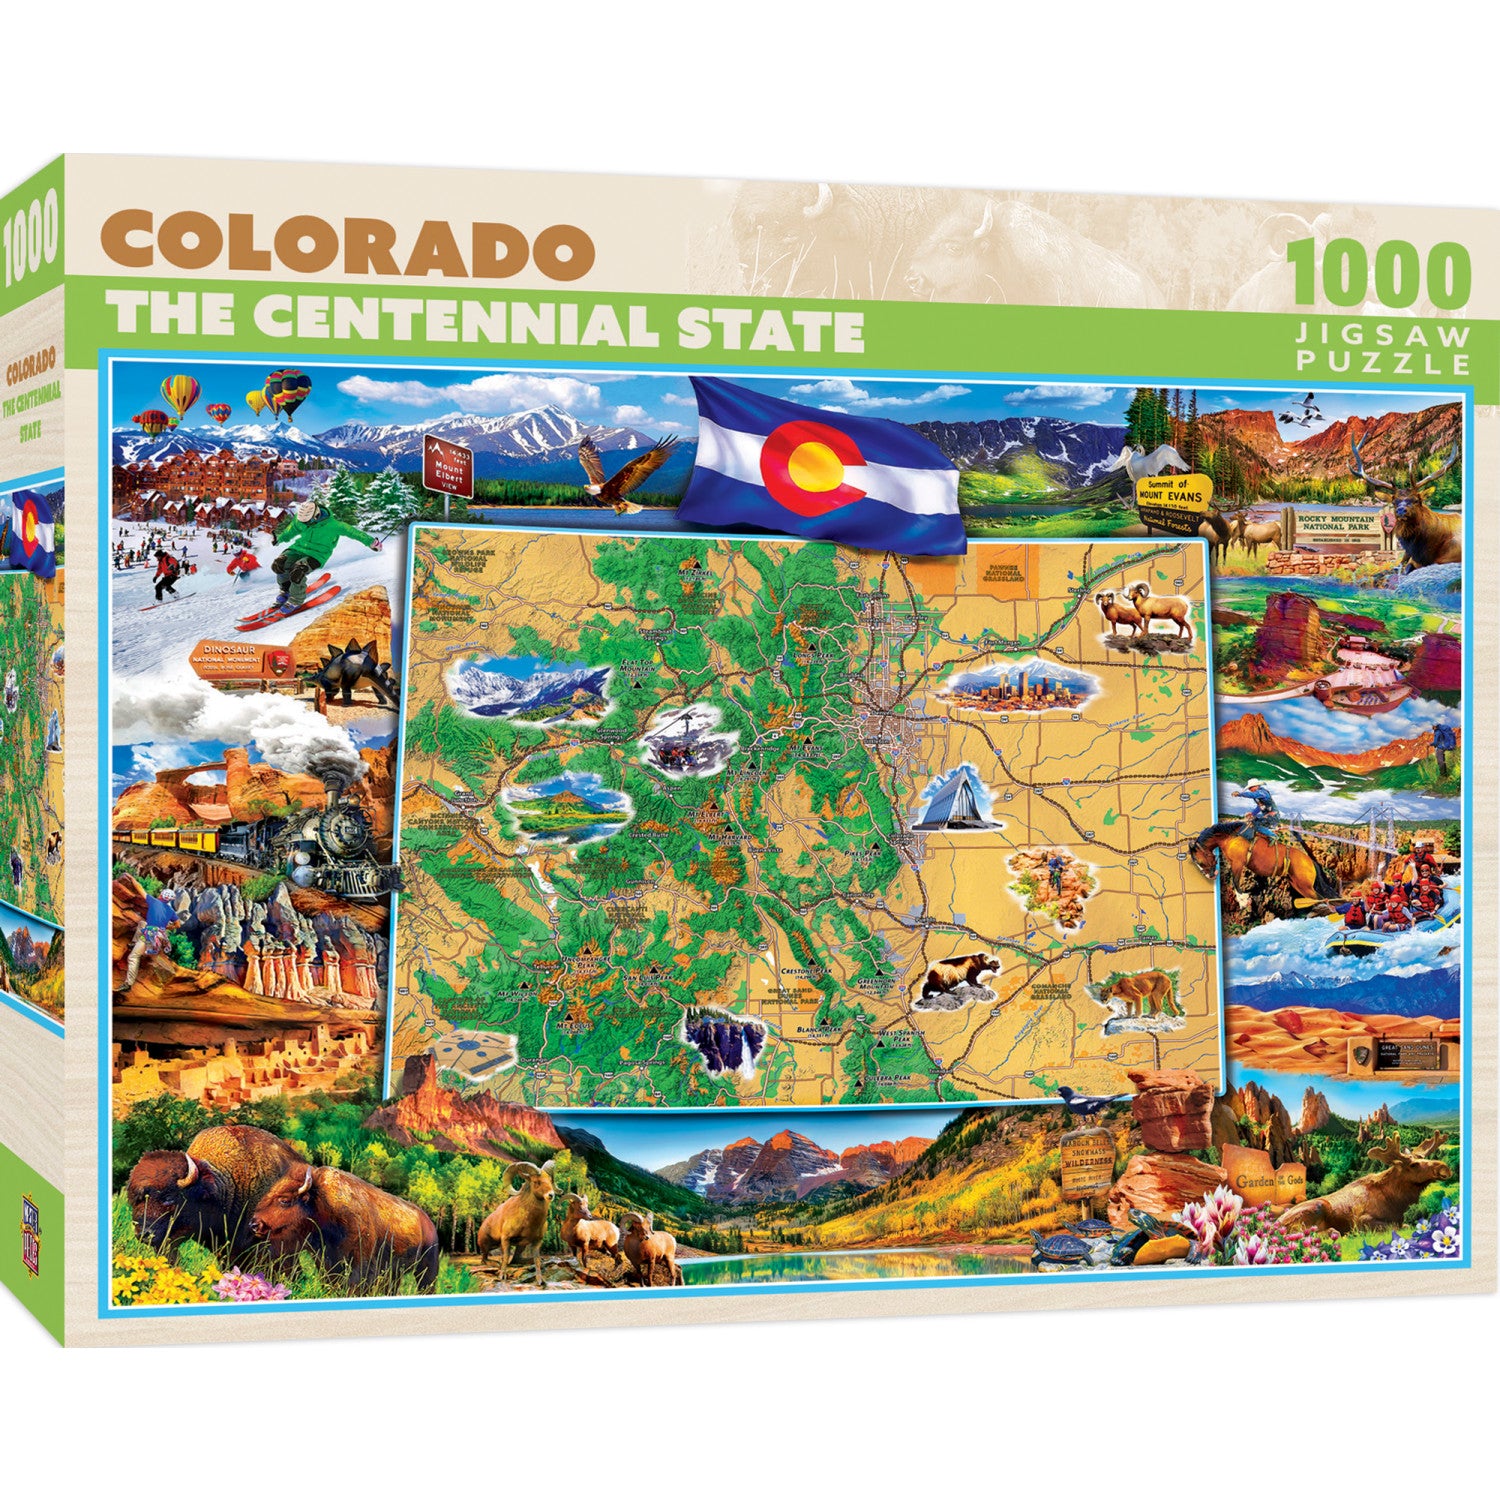 Colorado - The Centennial State 1000 Piece Puzzle